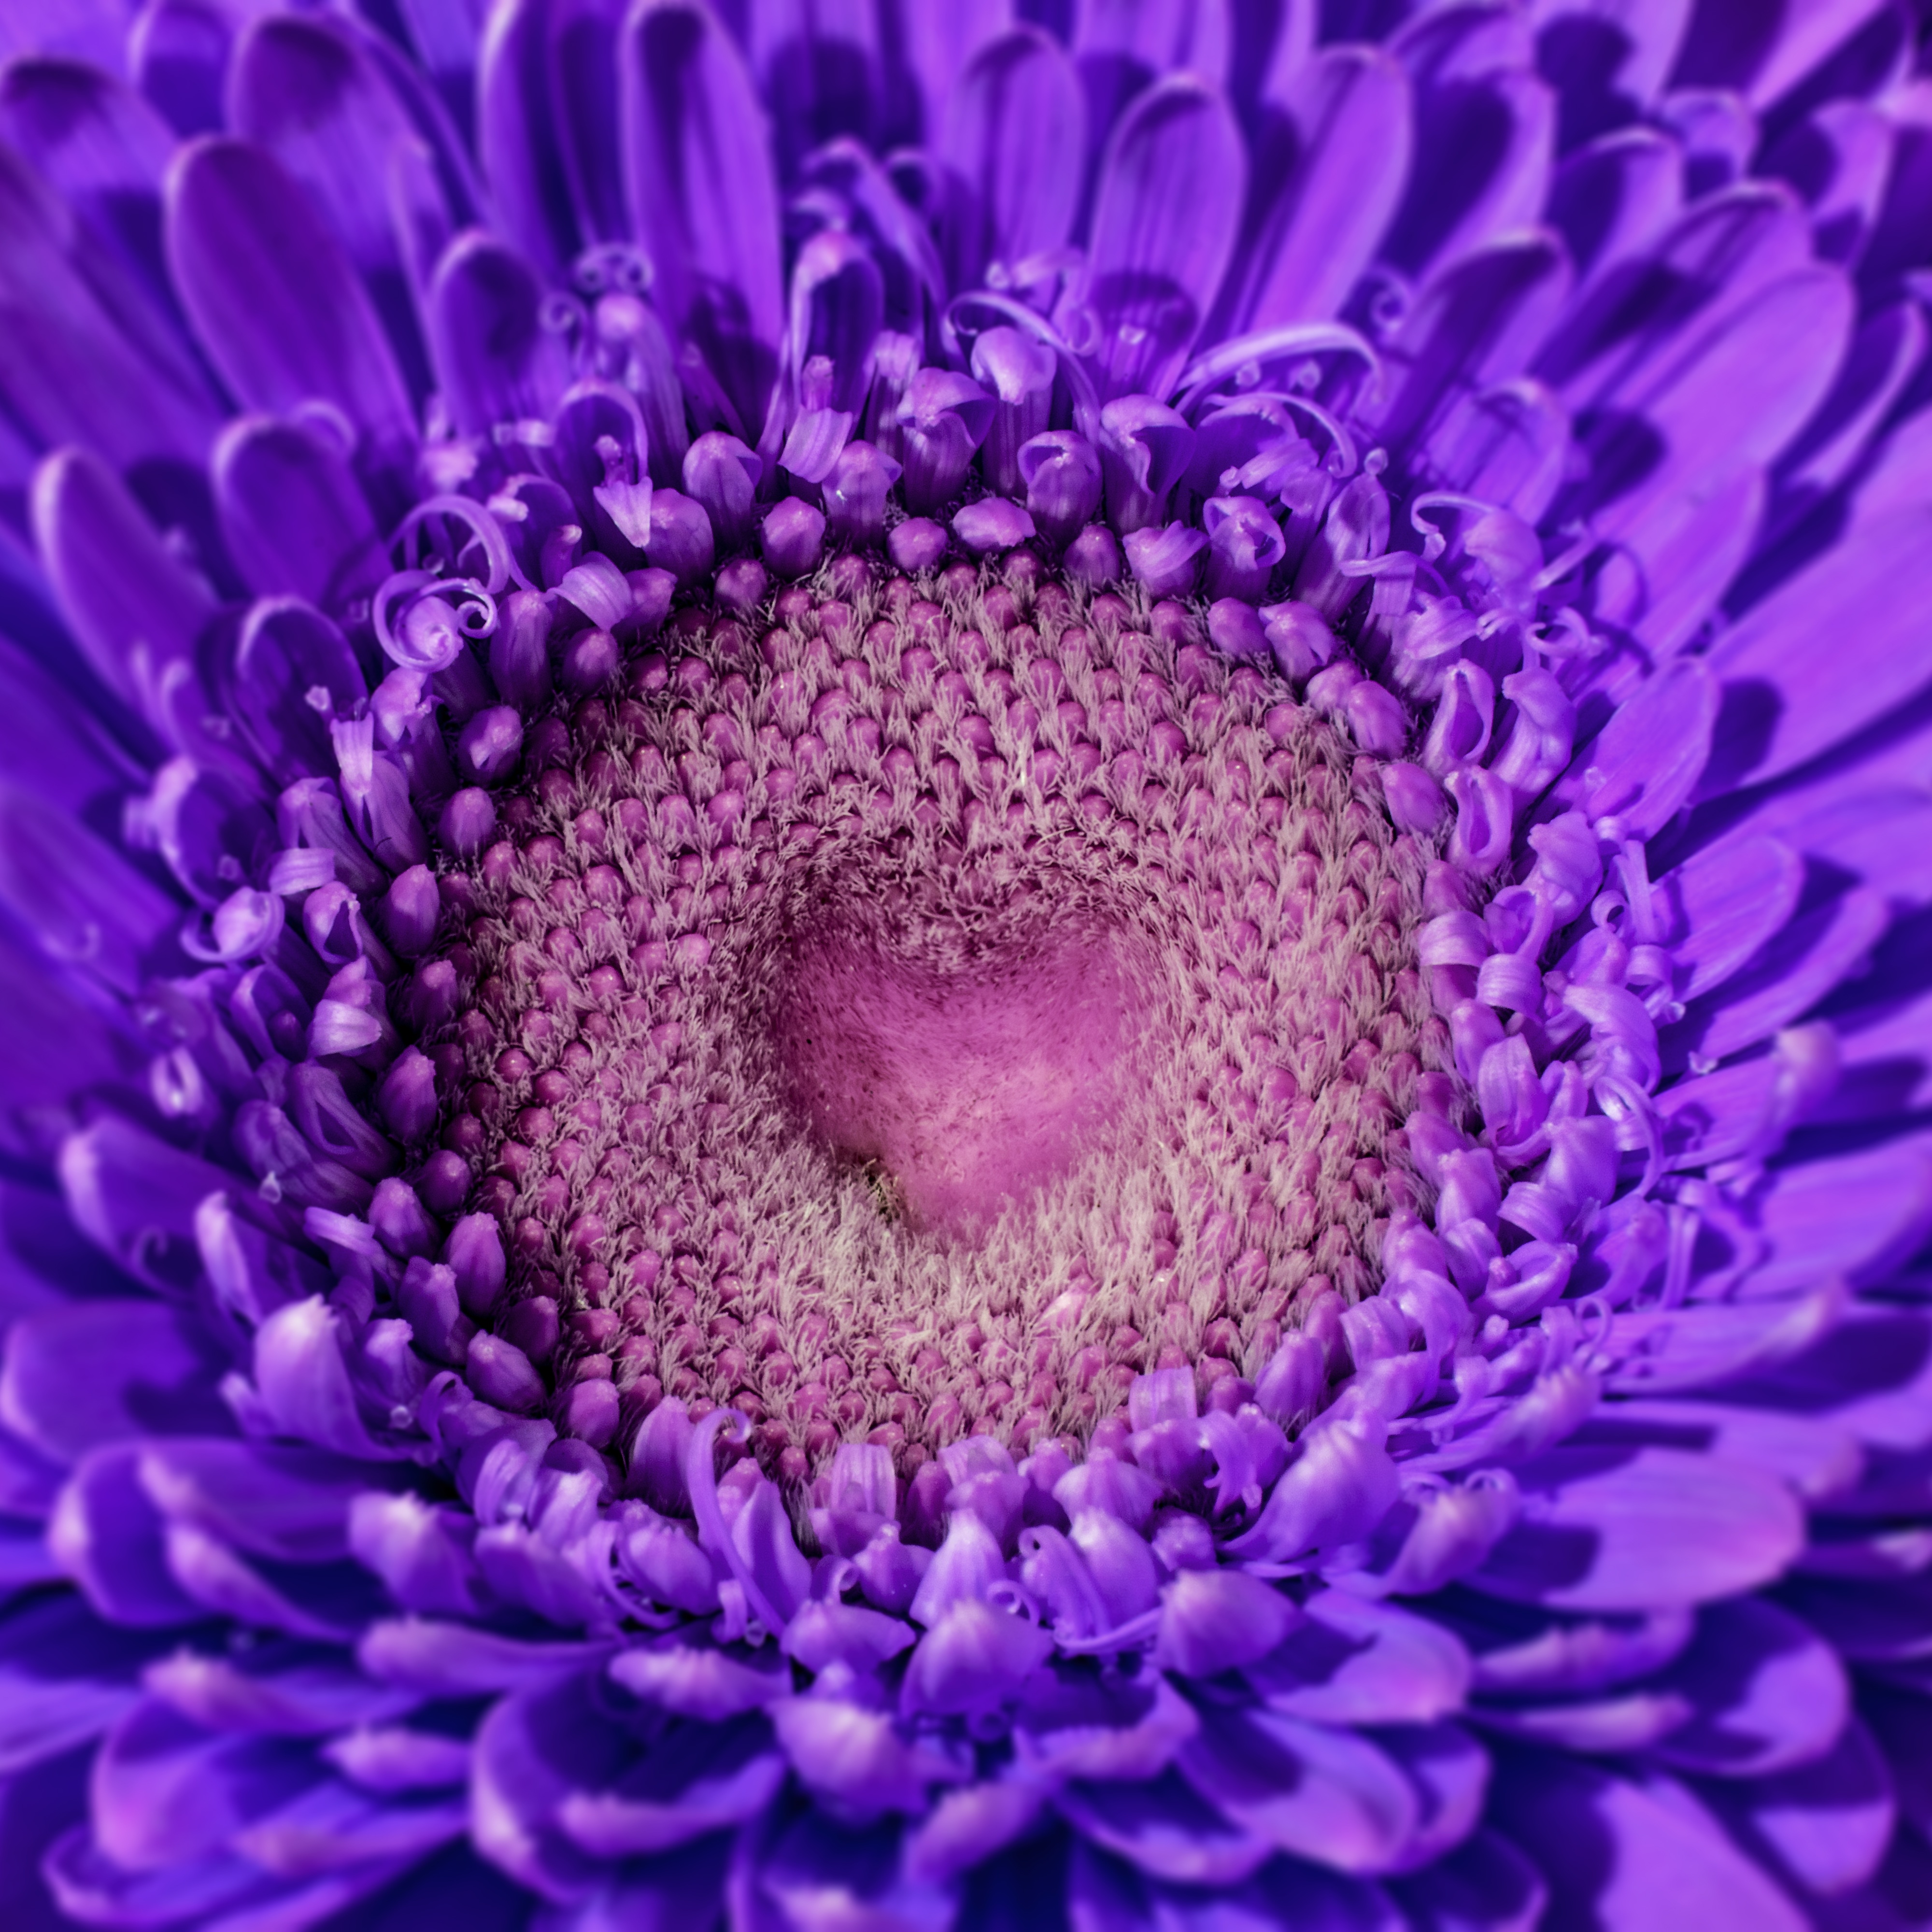 100243 download wallpaper violet, macro, petals, purple, heart, gerbera screensavers and pictures for free